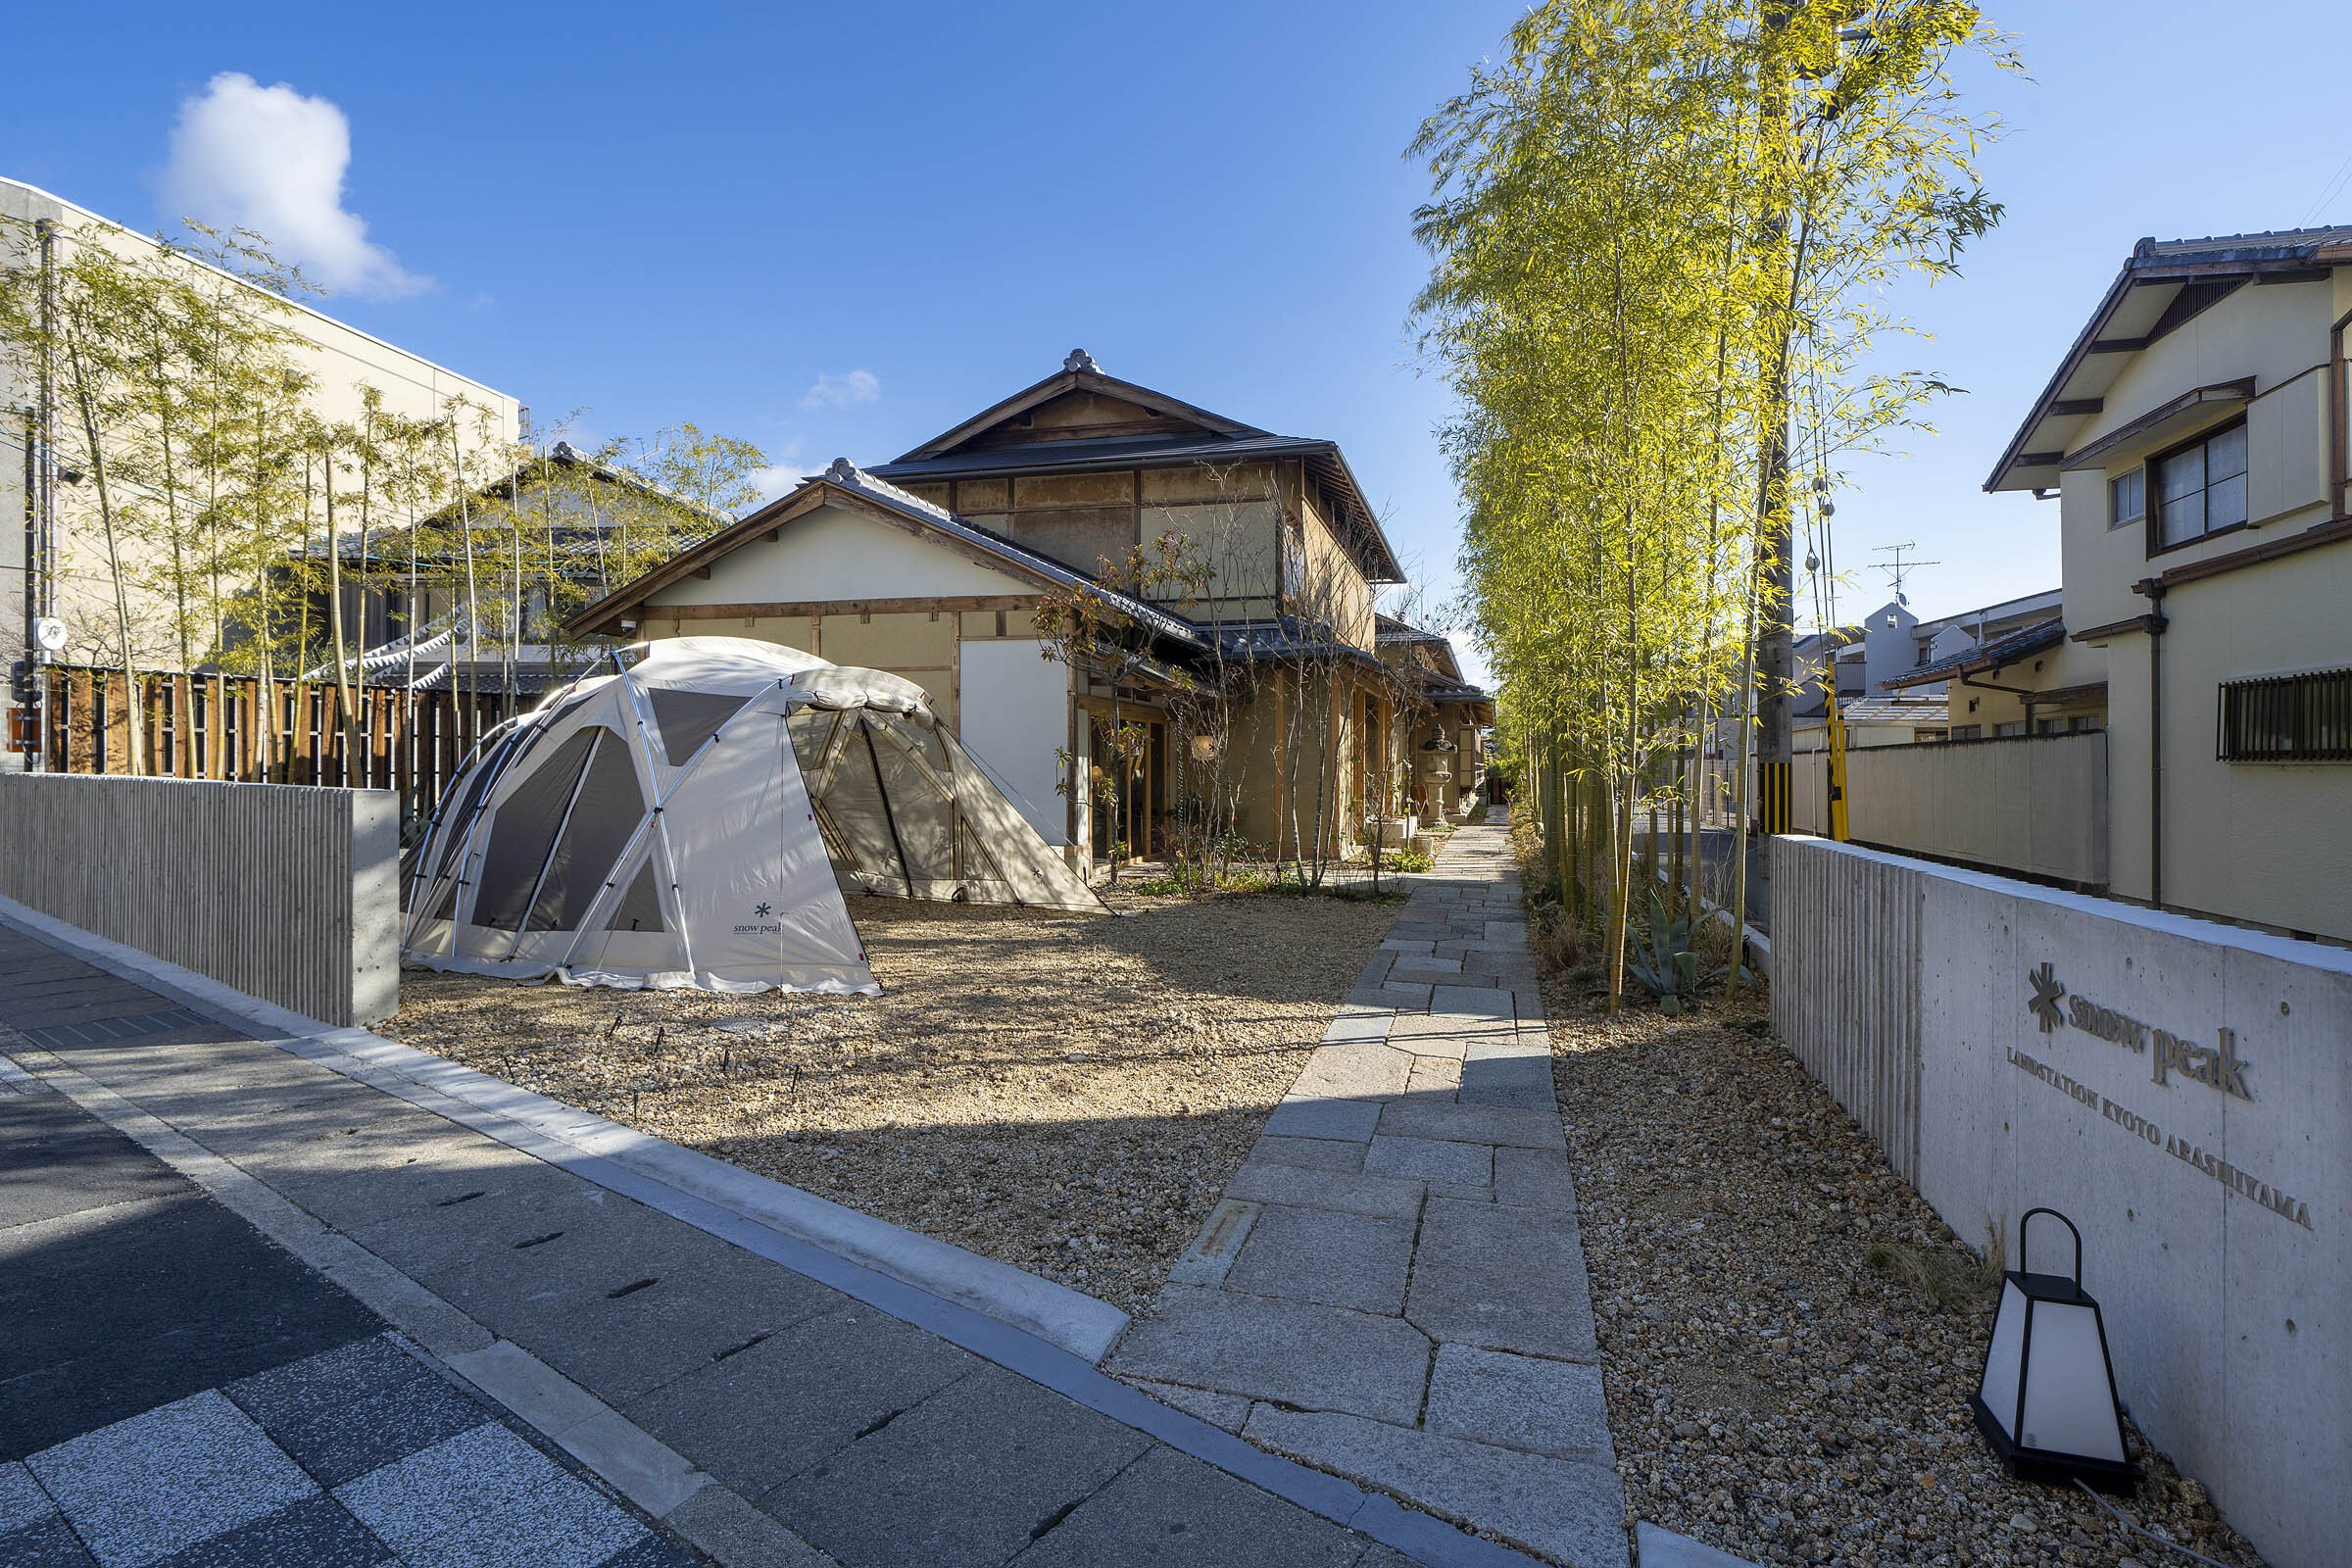  cafe co.の森井良幸がデザインしたスノーピークランドステーション京都嵐山の外観 